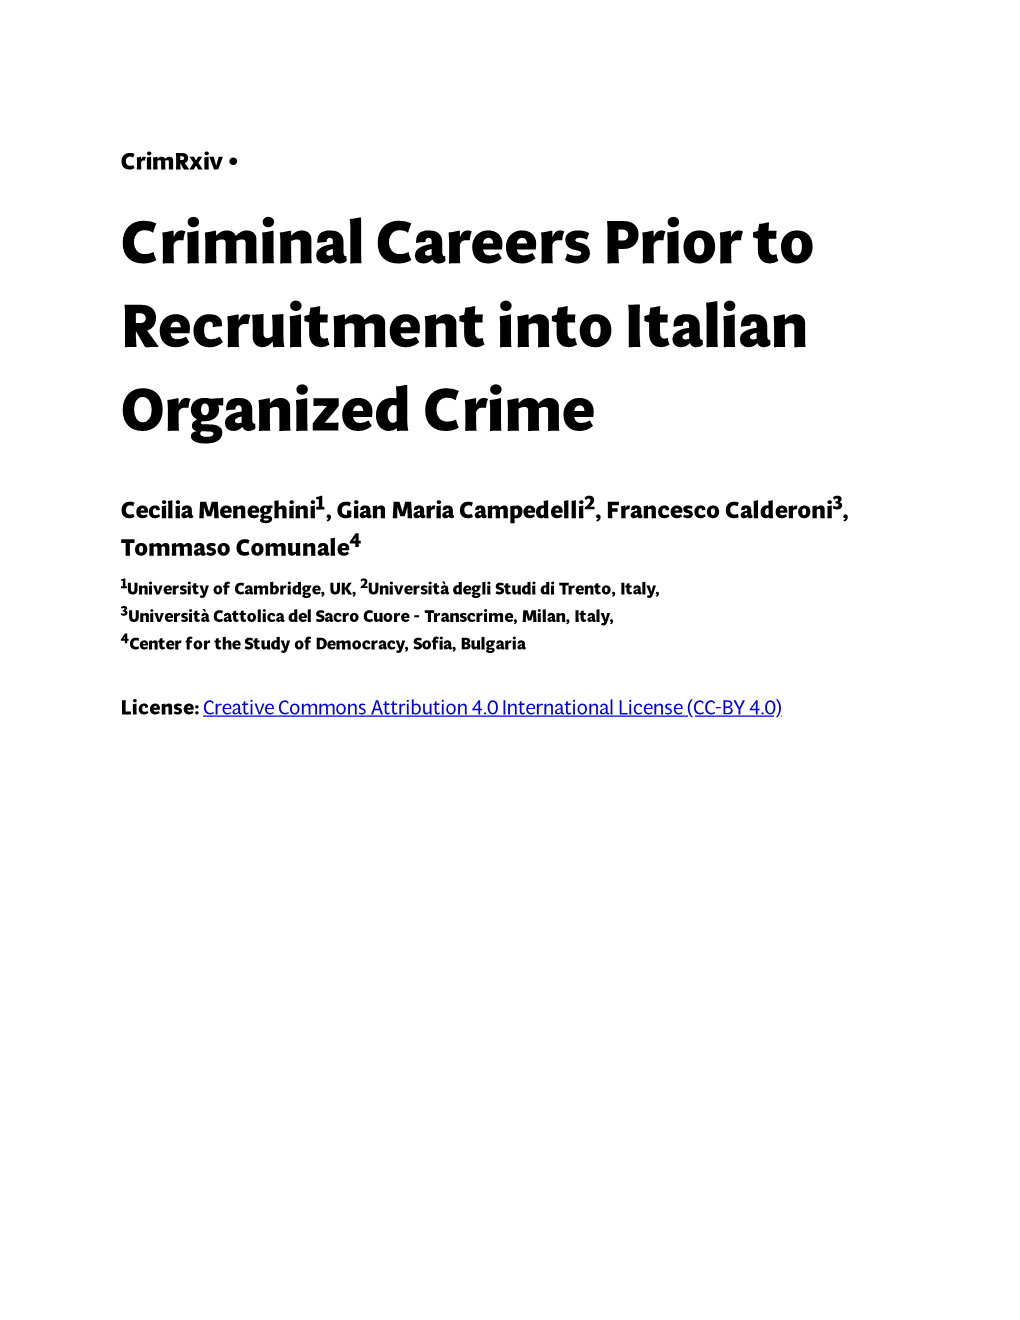 Criminal Careers Prior to Recruitment Into Italian Organized Crime